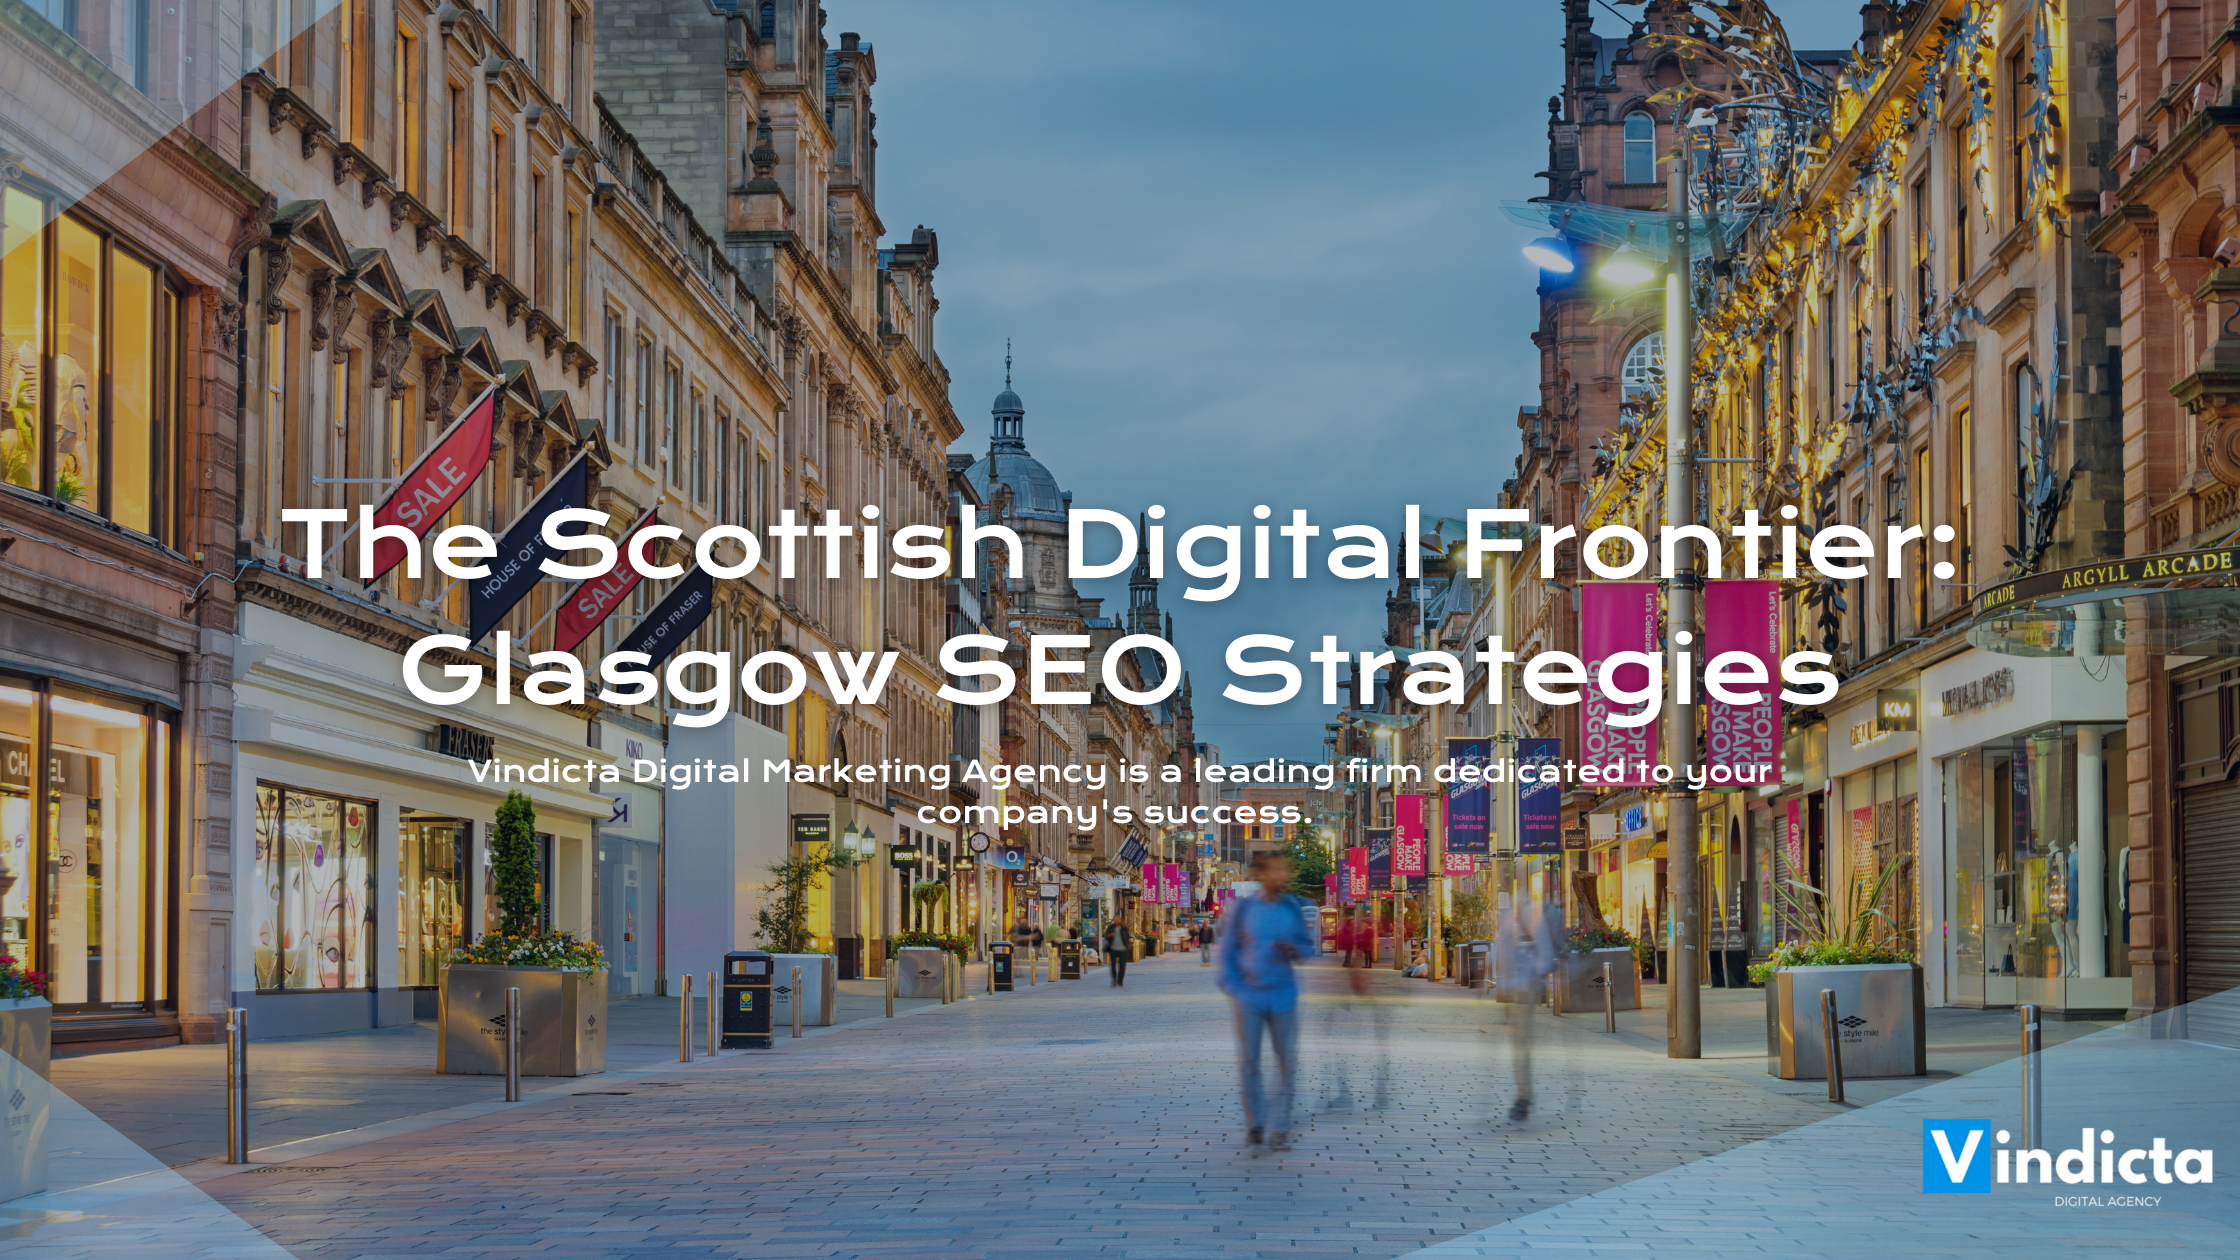 The Scottish Digital Frontier: Glasgow SEO Strategies